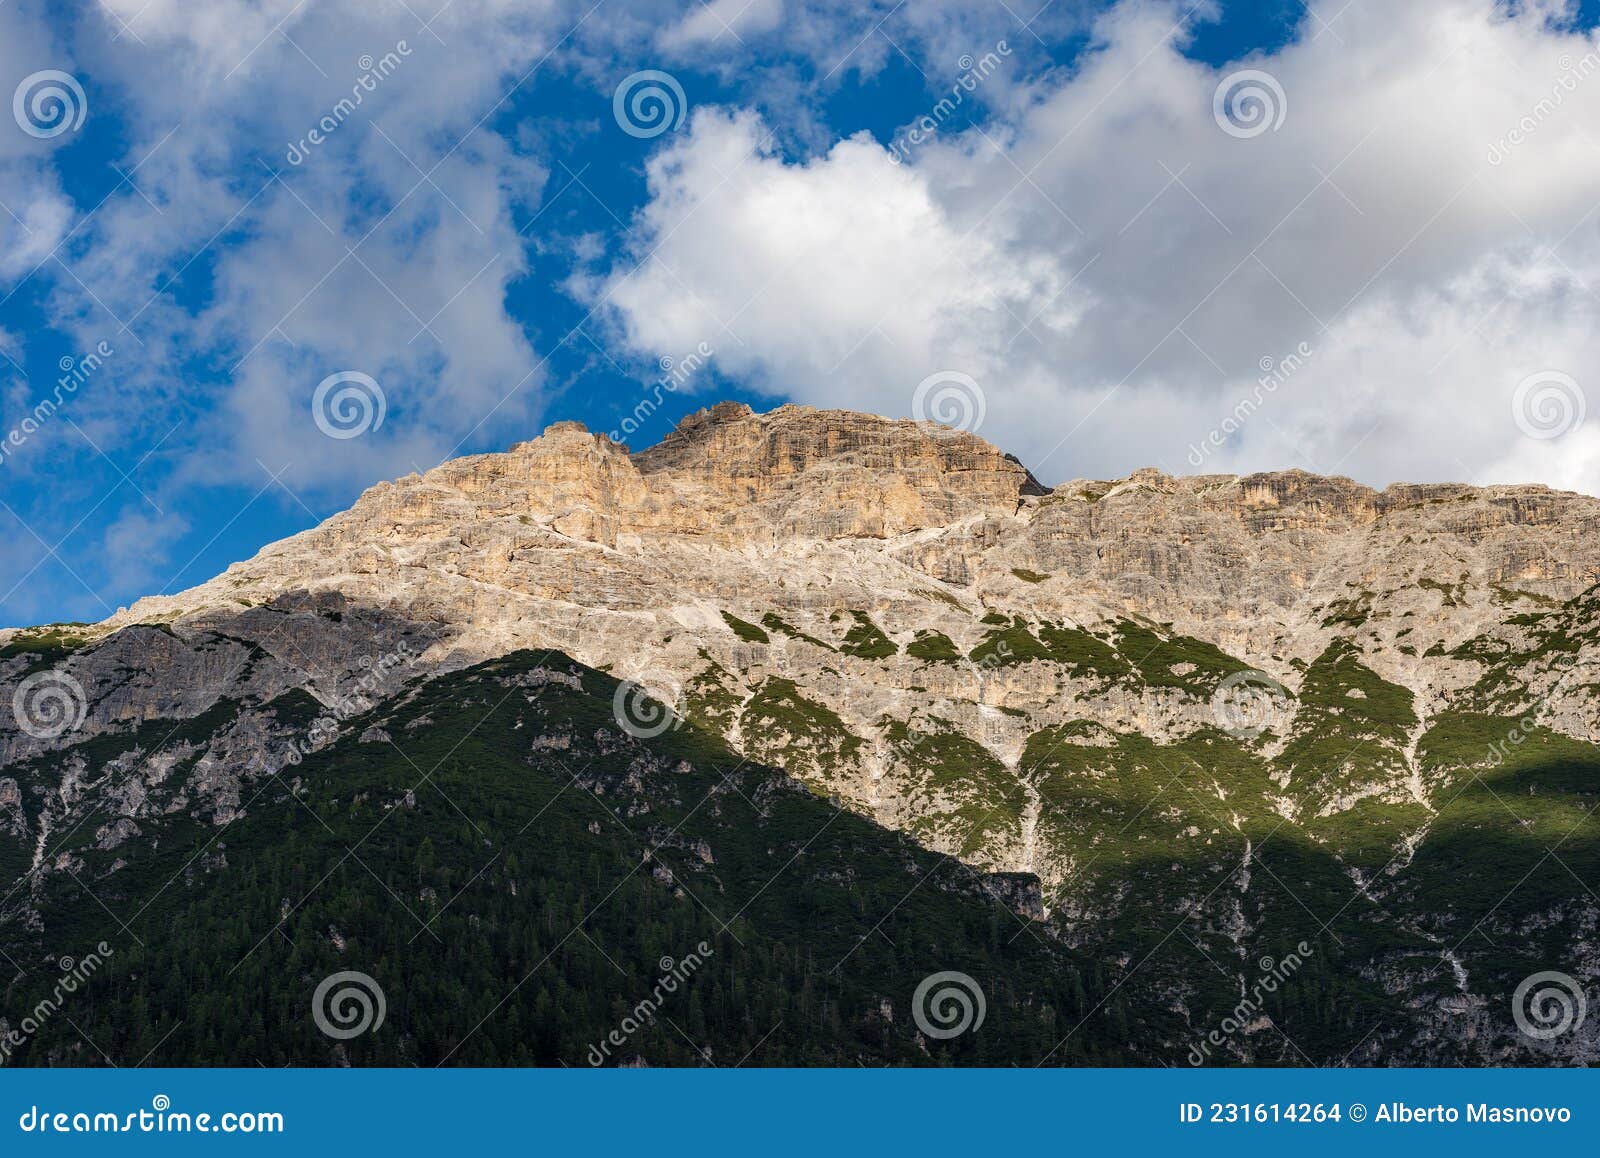 sesto dolomites italian alps - rautkofel or monte rudo in landro valley